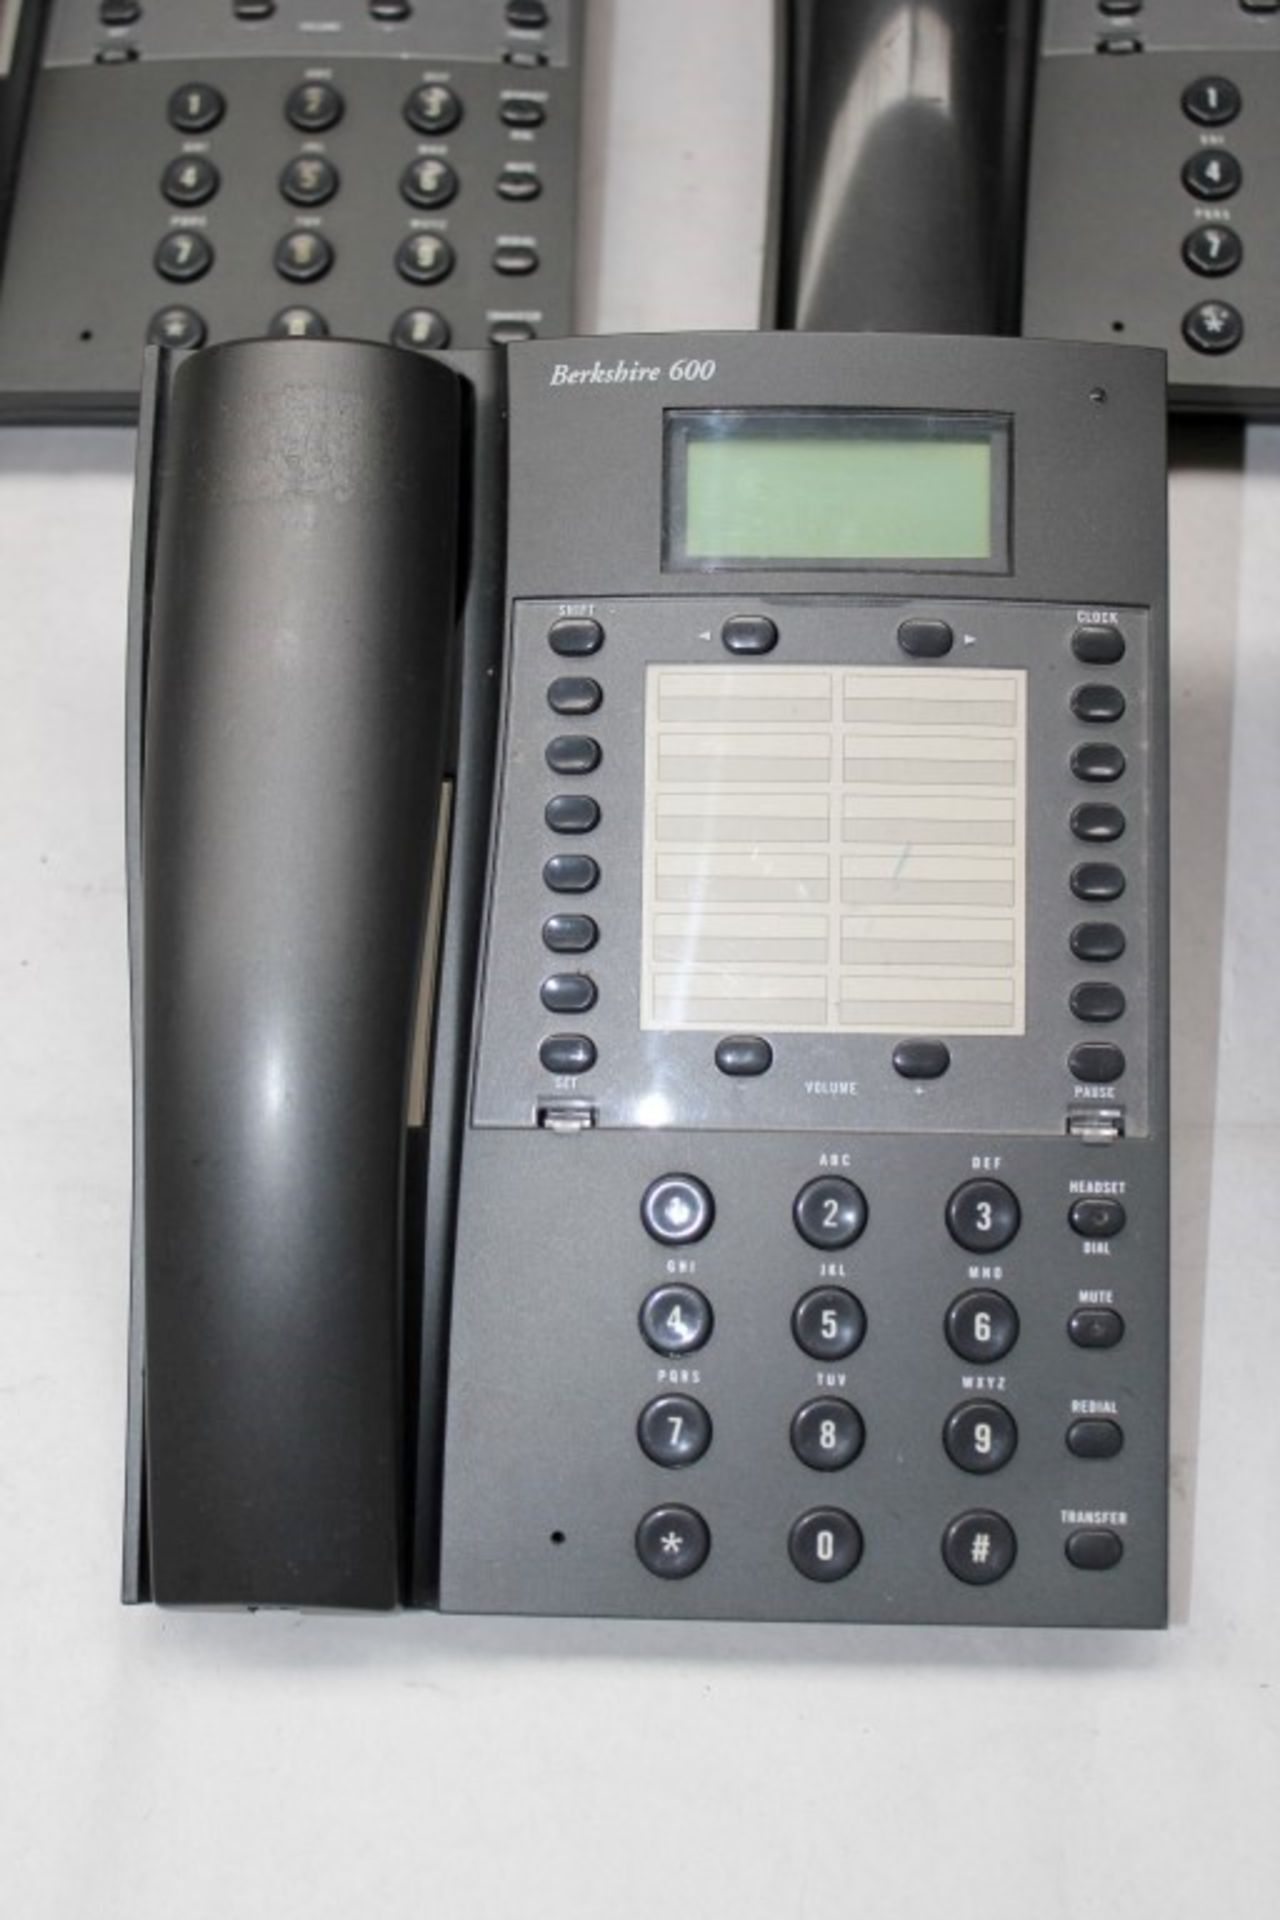 5 x ATL Professional Office Telephones - Model: Berkshire 600 - Pre-owned In Working Order - Taken - Image 2 of 3